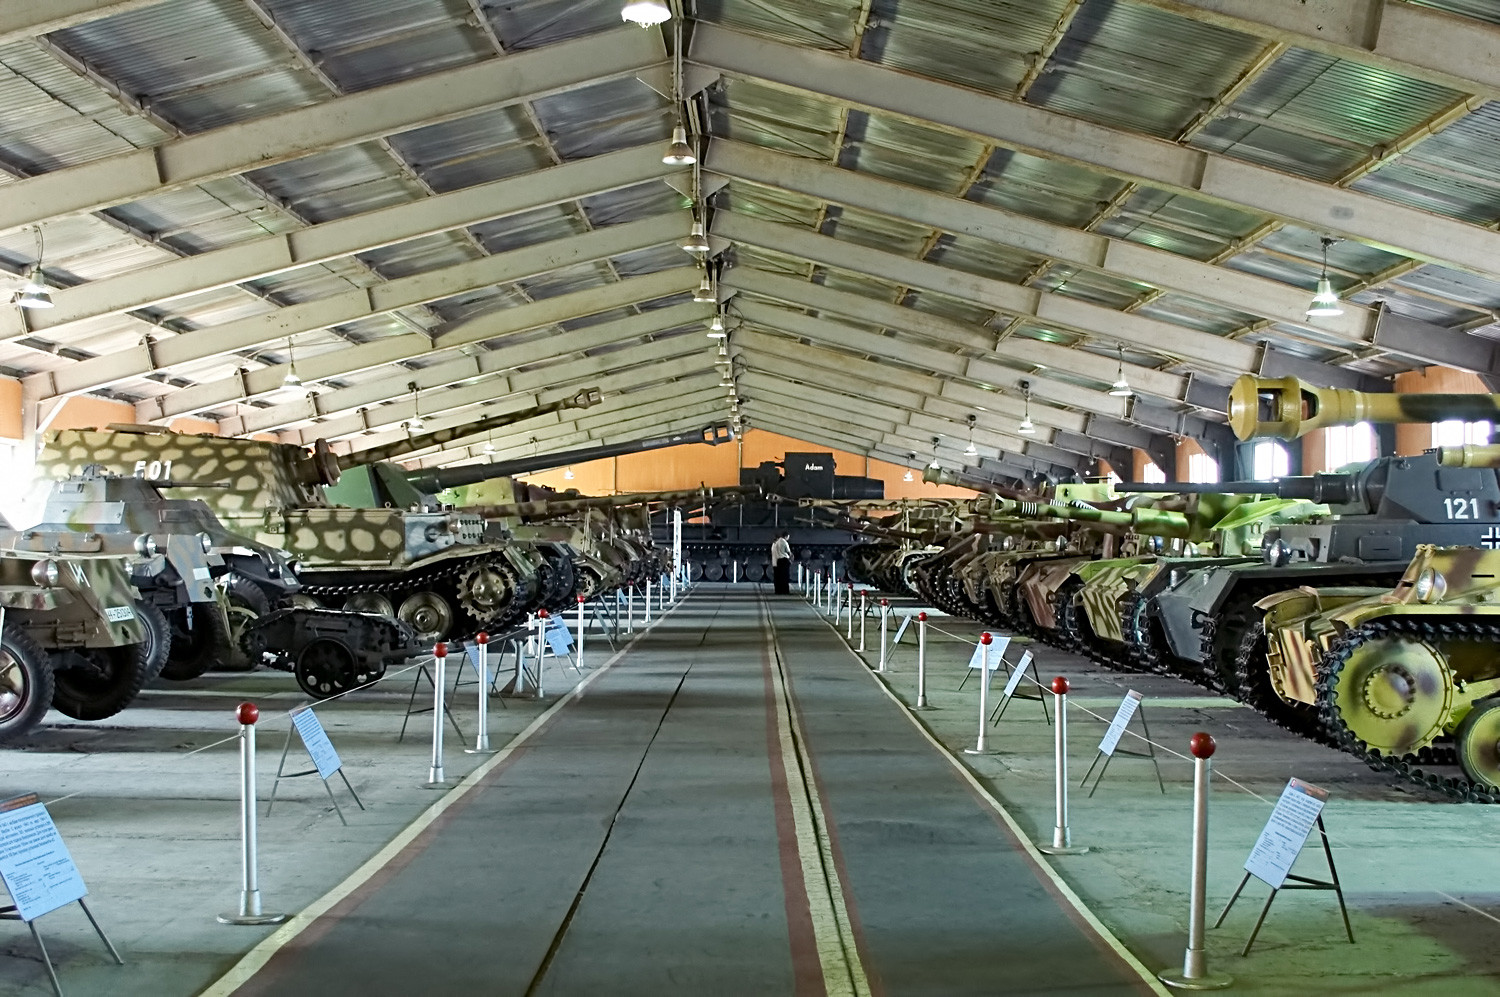 The Tank Museum in Kubinka